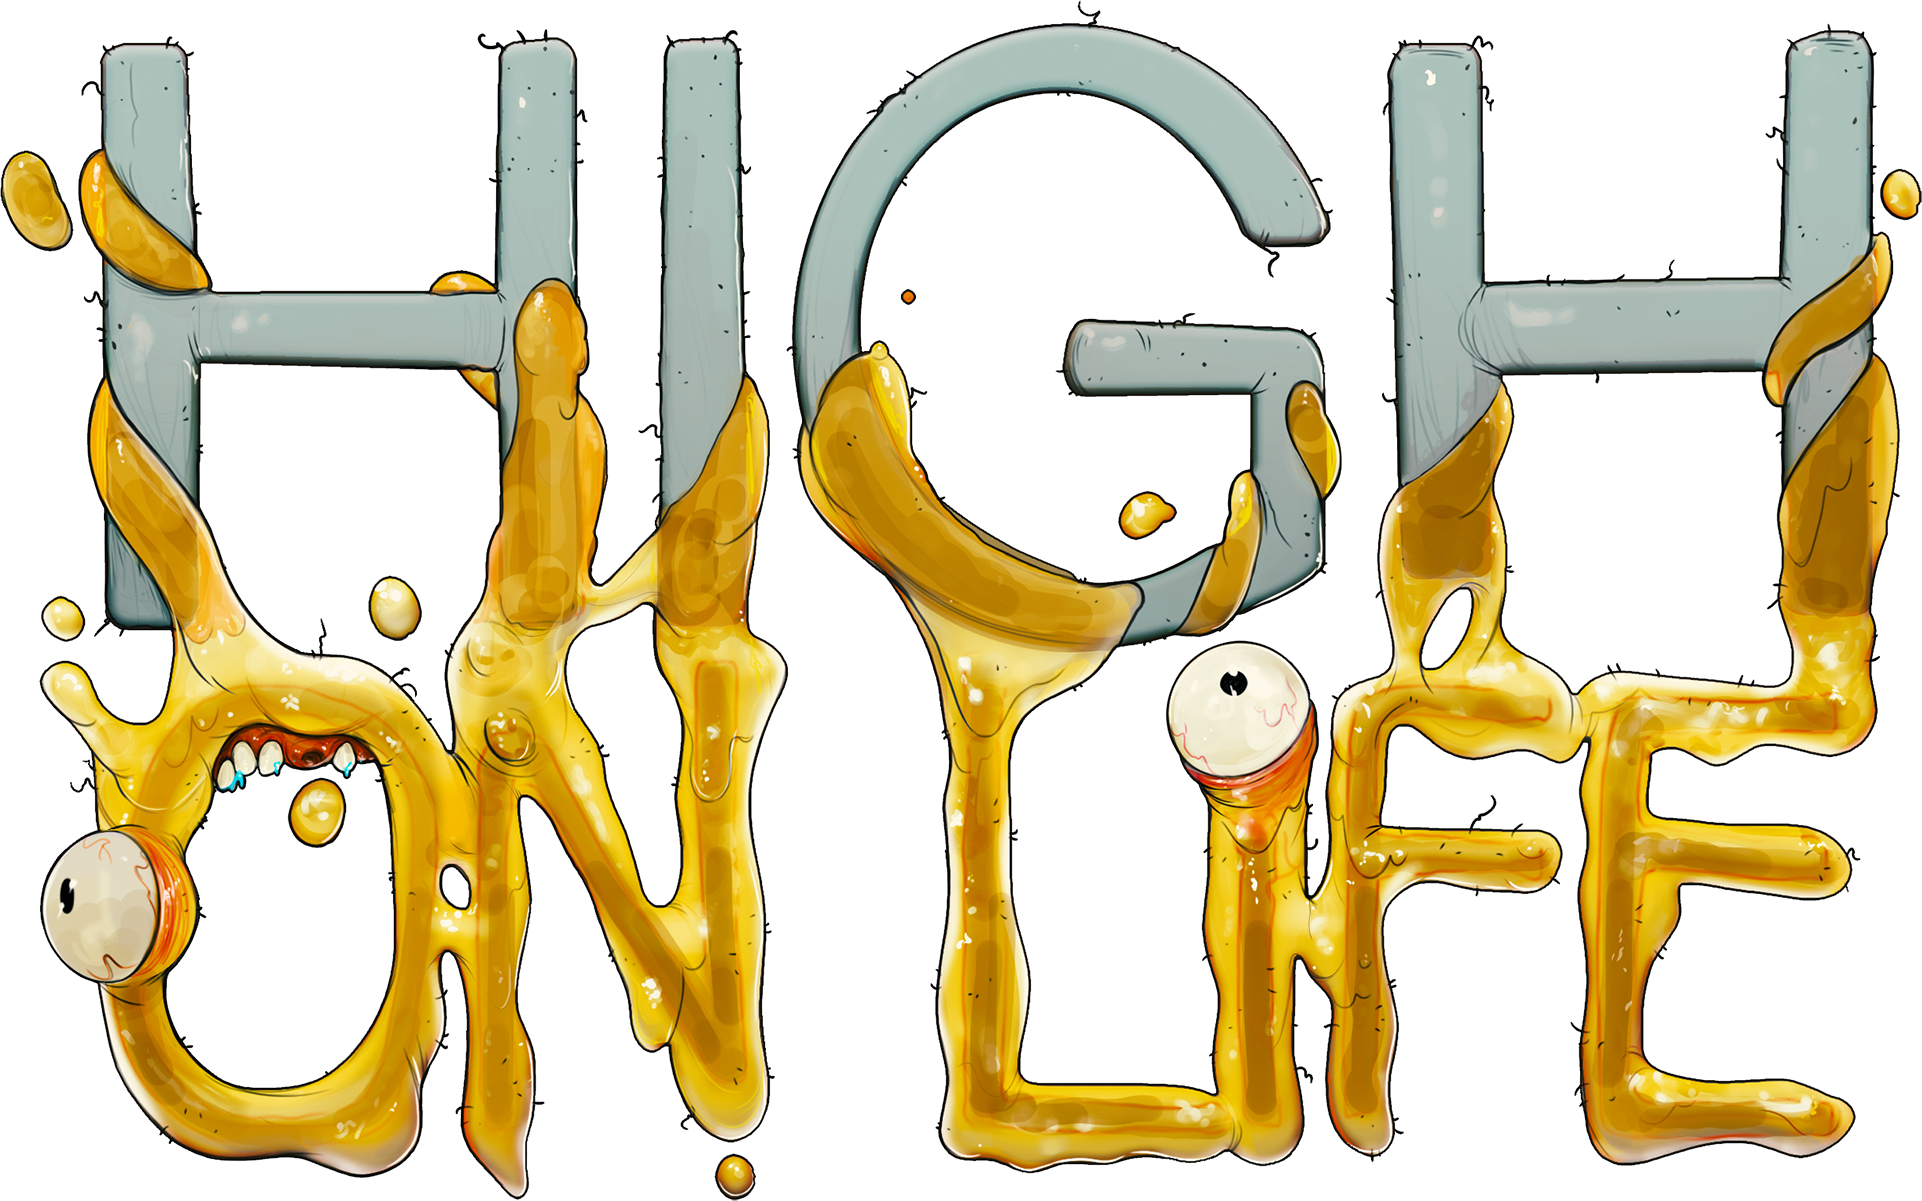 High On Life on Steam